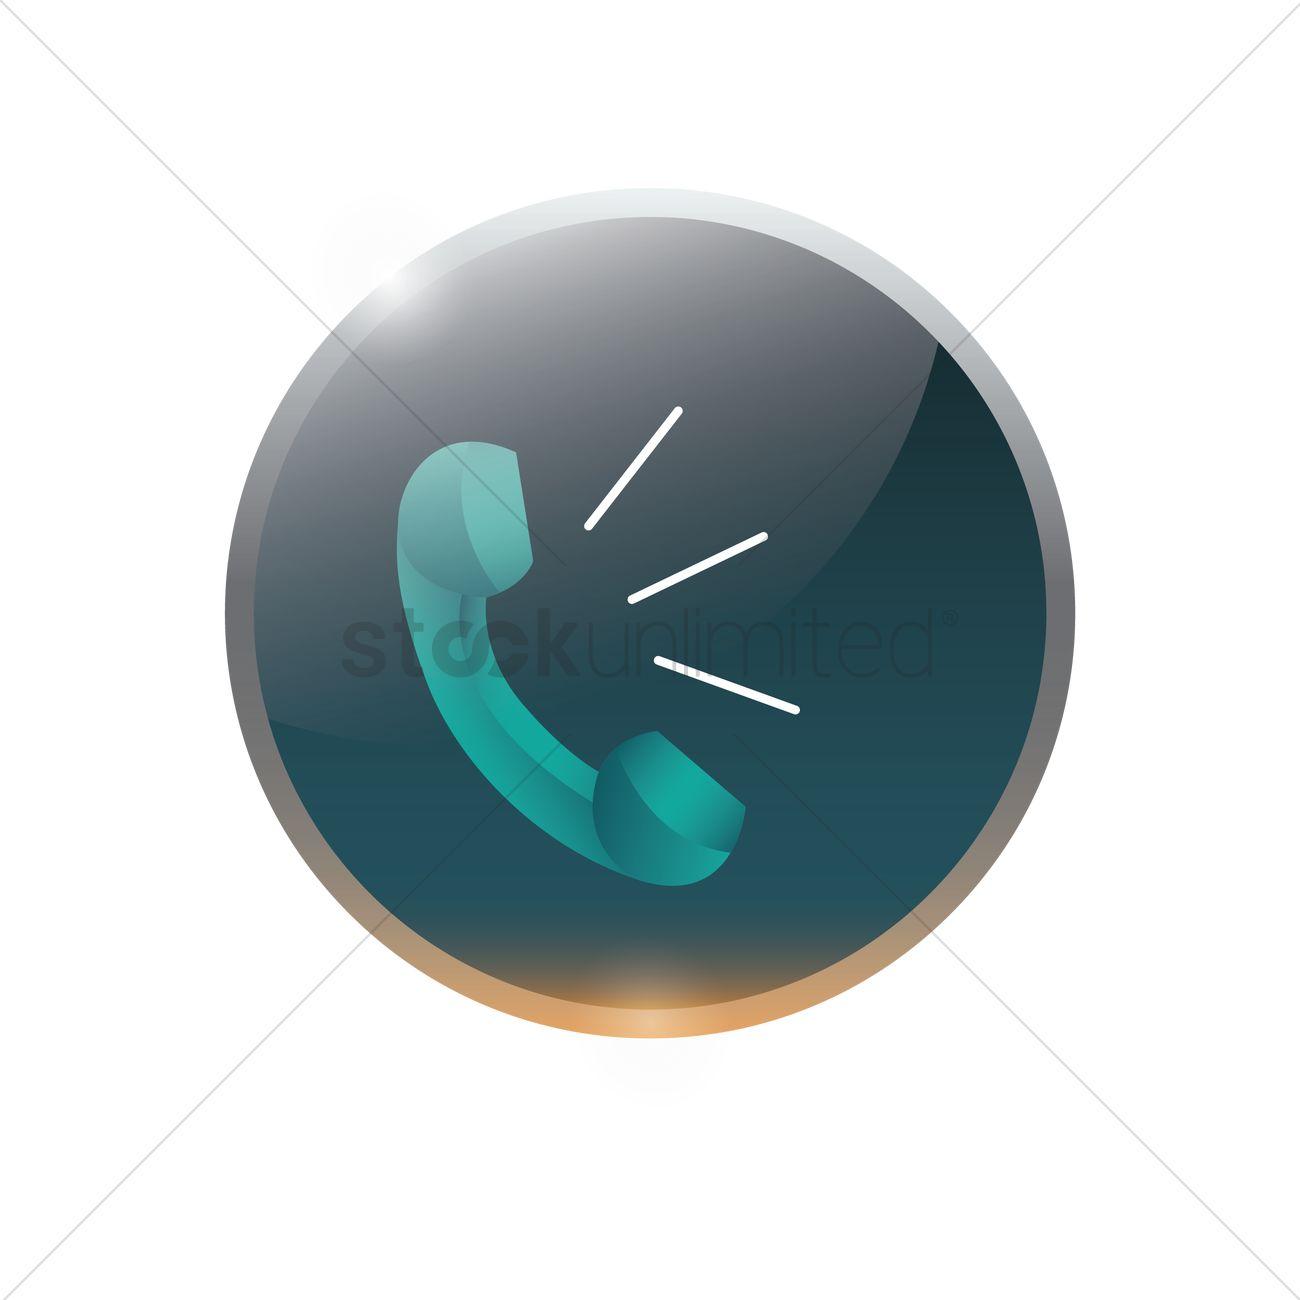 Phone Call Circle Logo - Phone call icon Vector Image - 1941908 | StockUnlimited